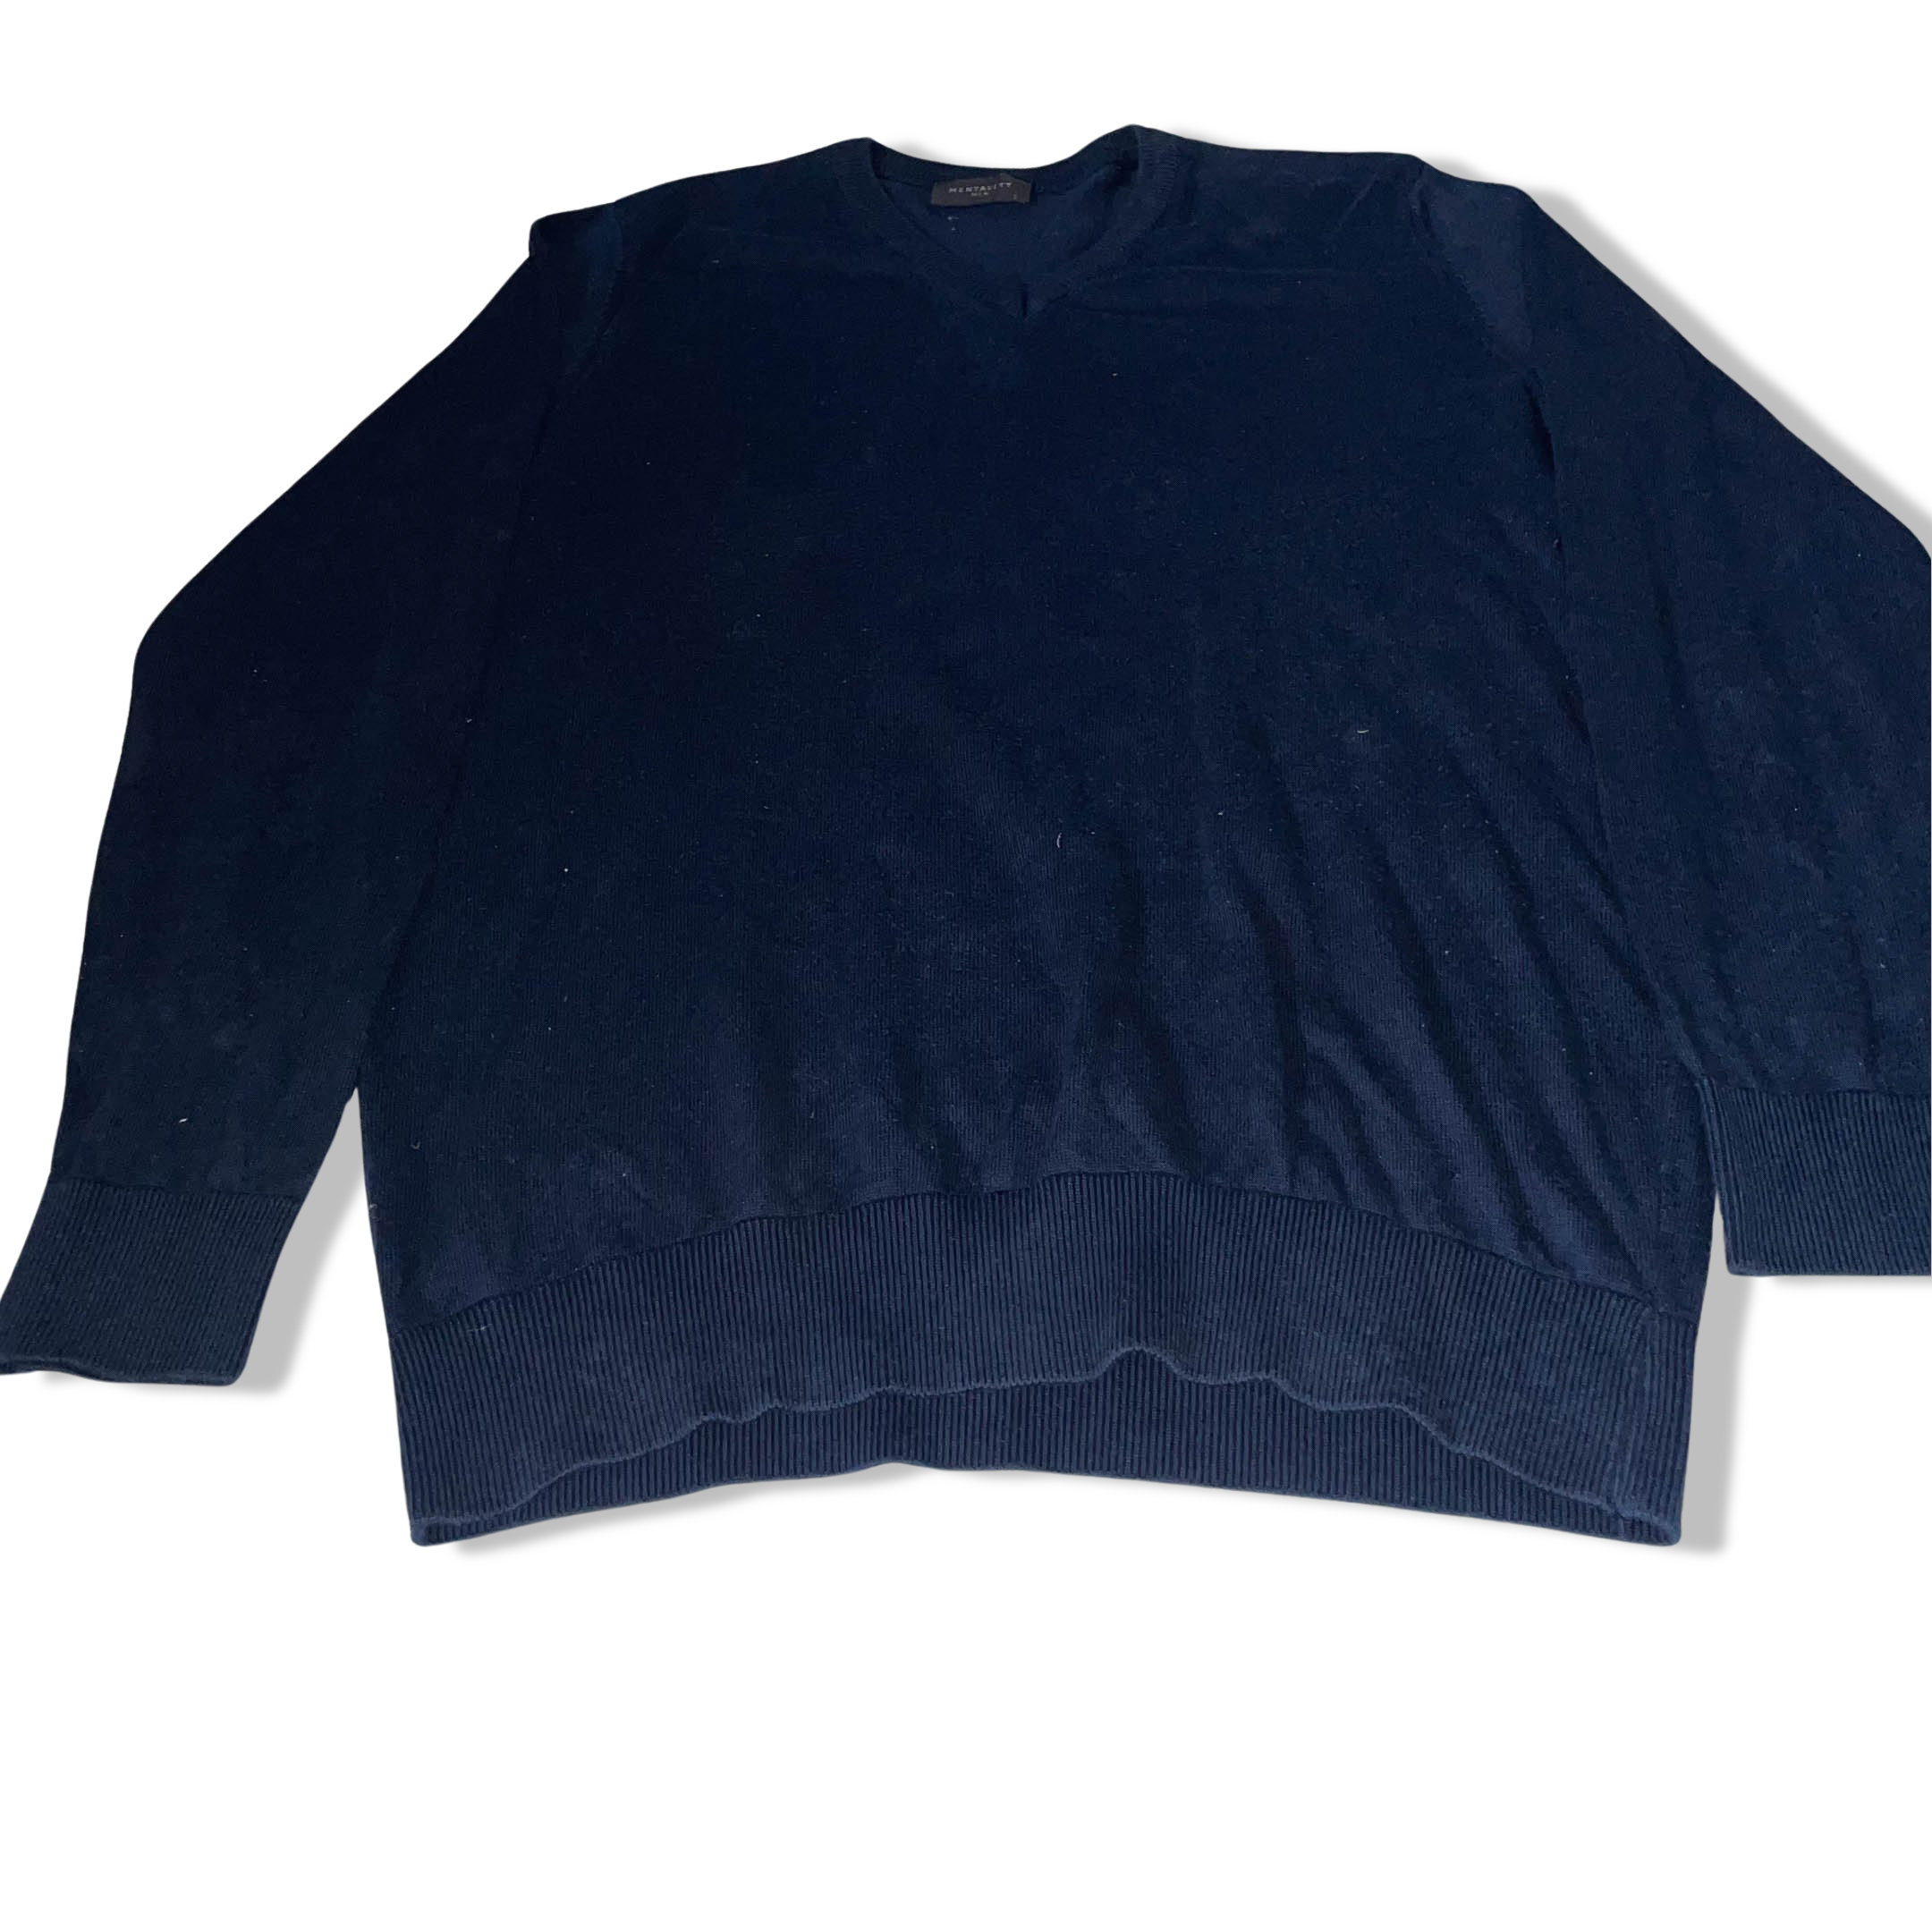 Navy blue mens Mentality large regular fit sweatshirt